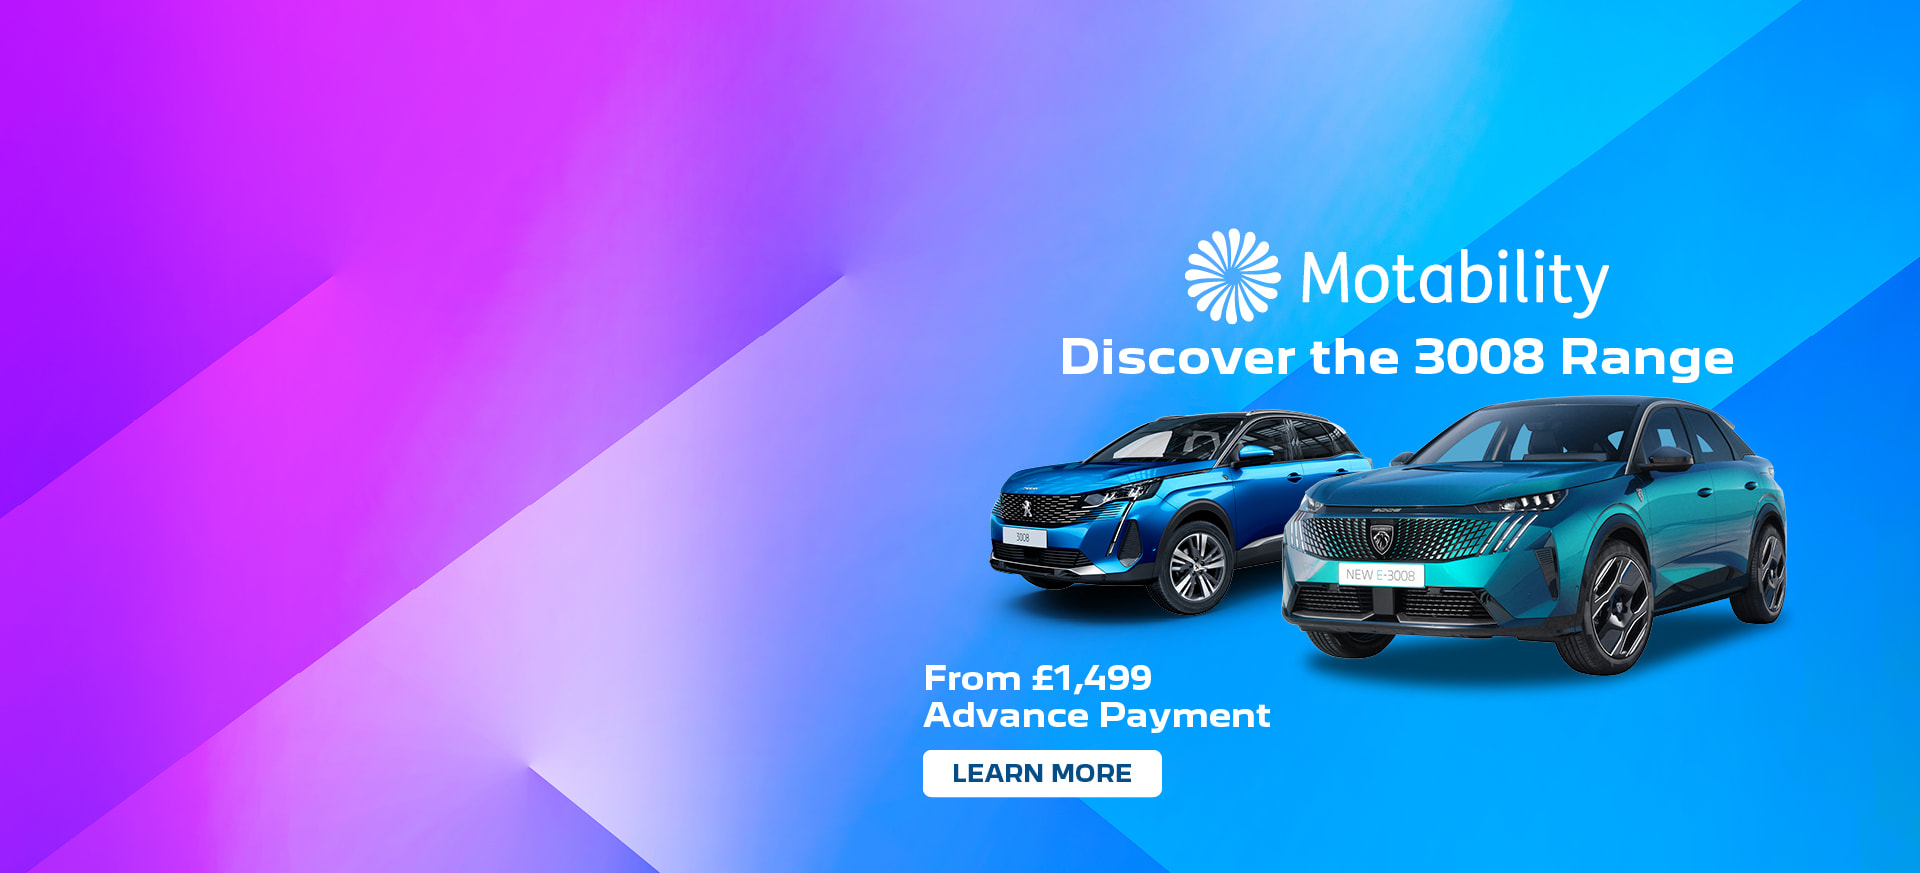 Peugeot Motability offers